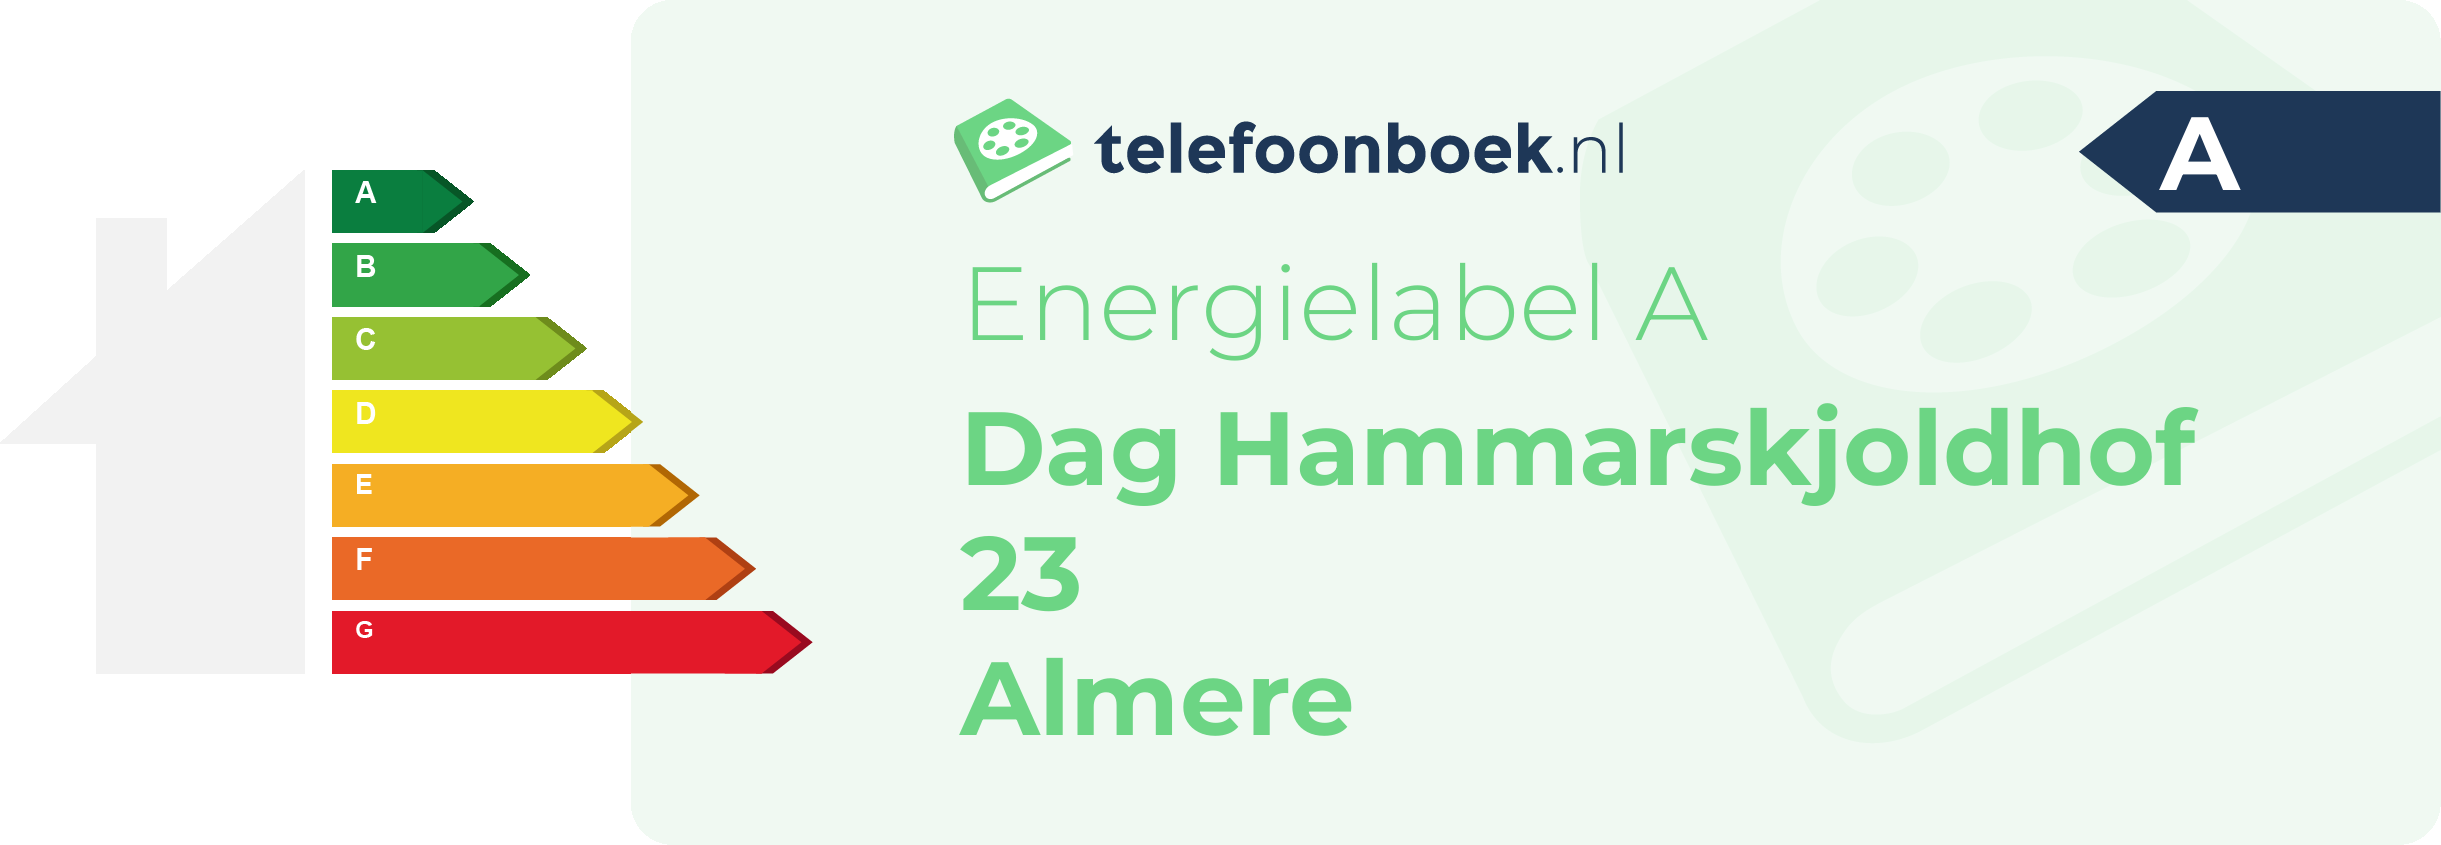 Energielabel Dag Hammarskjoldhof 23 Almere